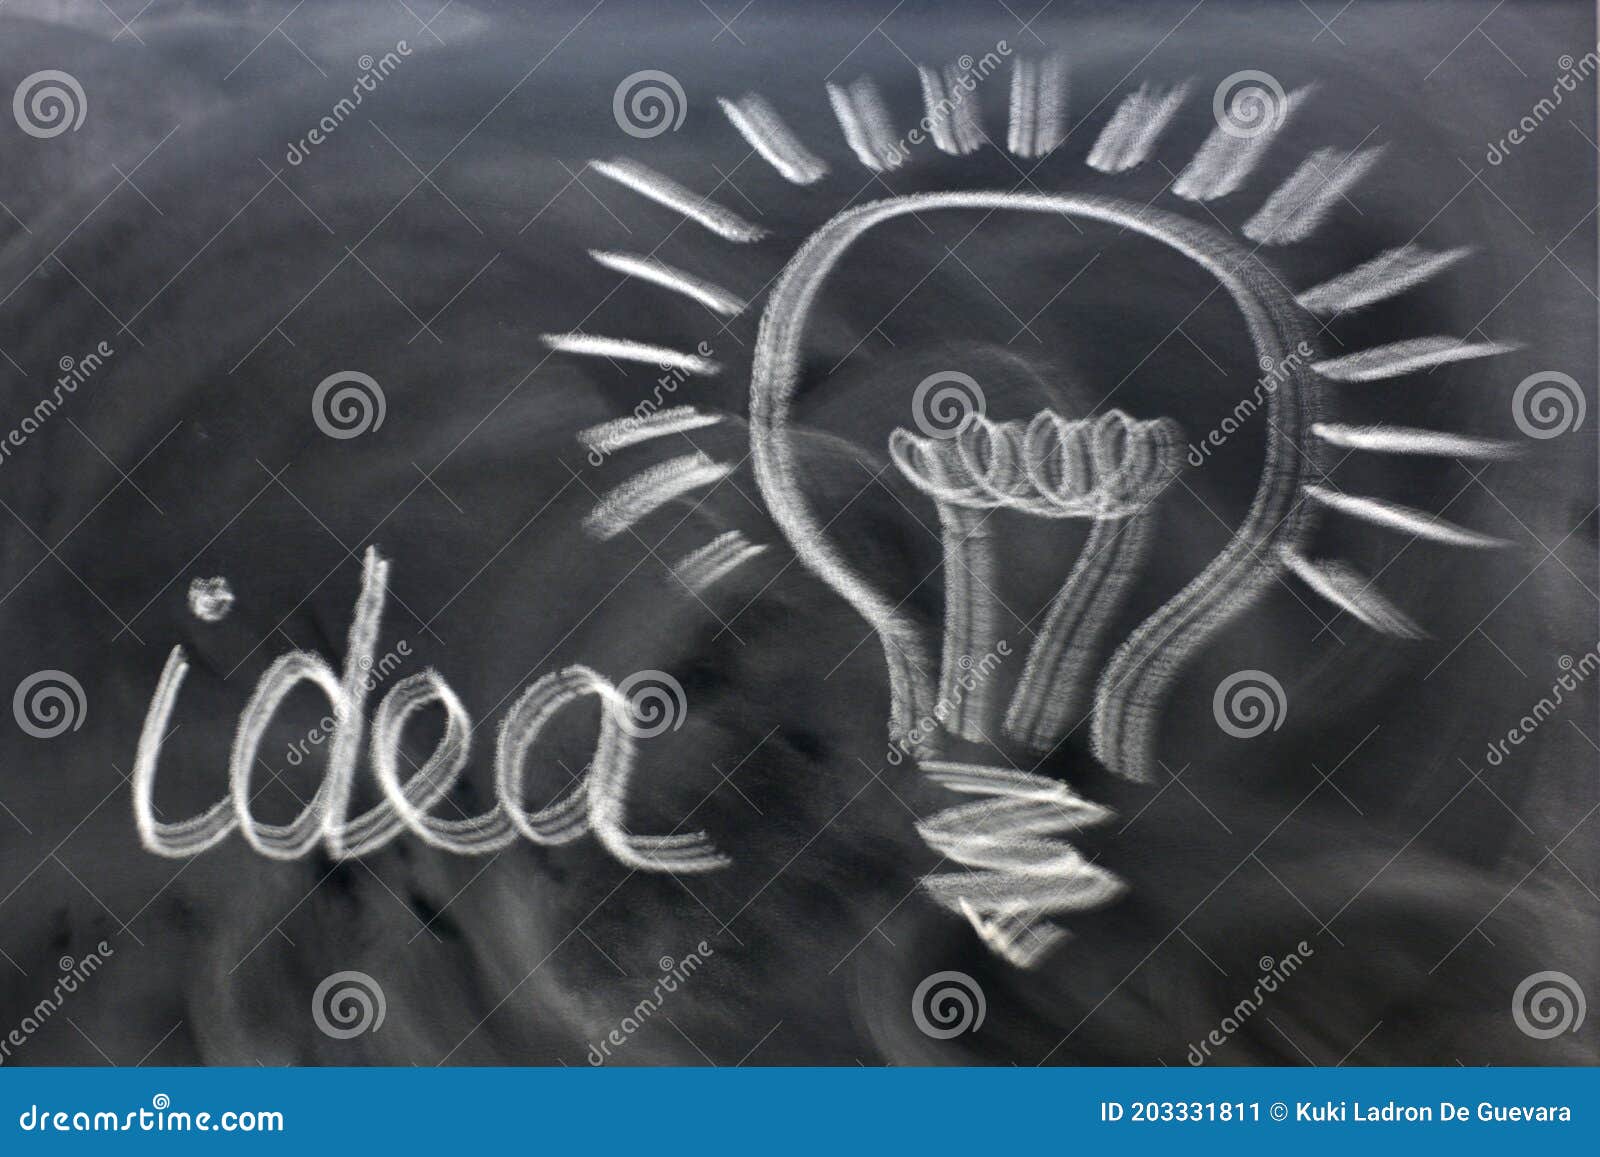 a light bulb drawn on the blackboard